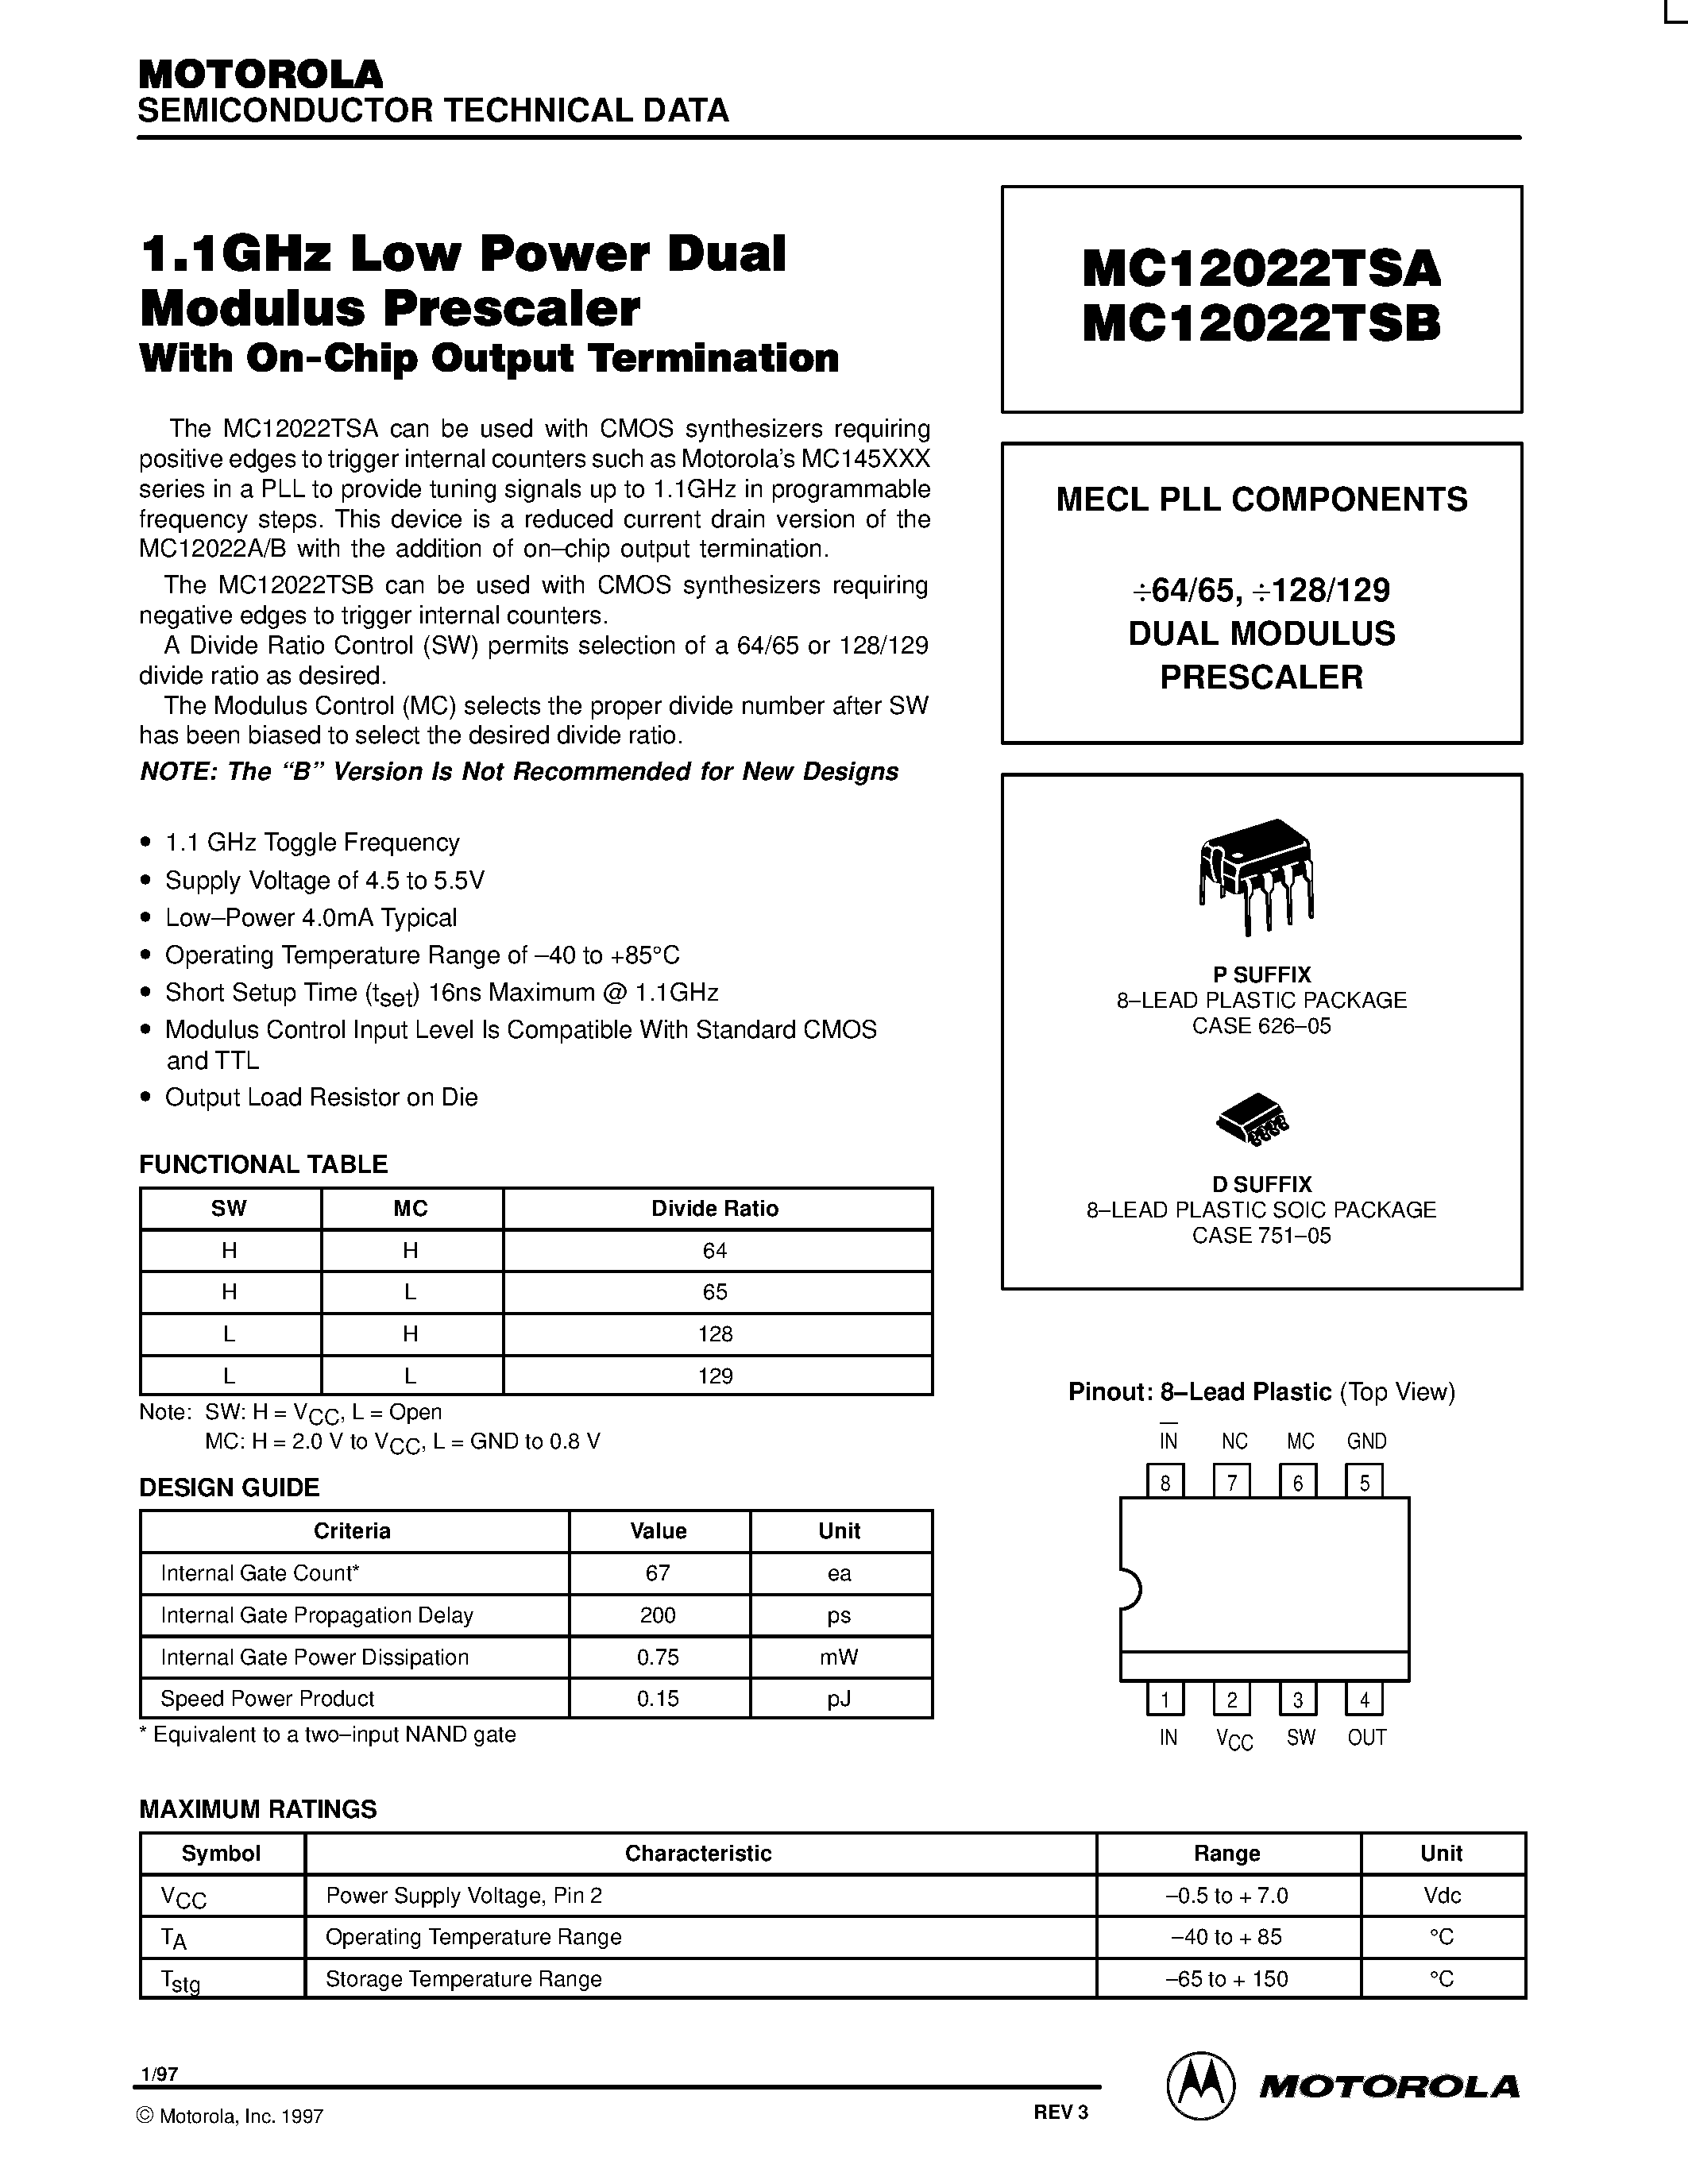 Datasheet MC12022TSAP - MECL PLL COMPONENTS 64/65 / 128/129 DUAL MODULUS PRESCALE page 1